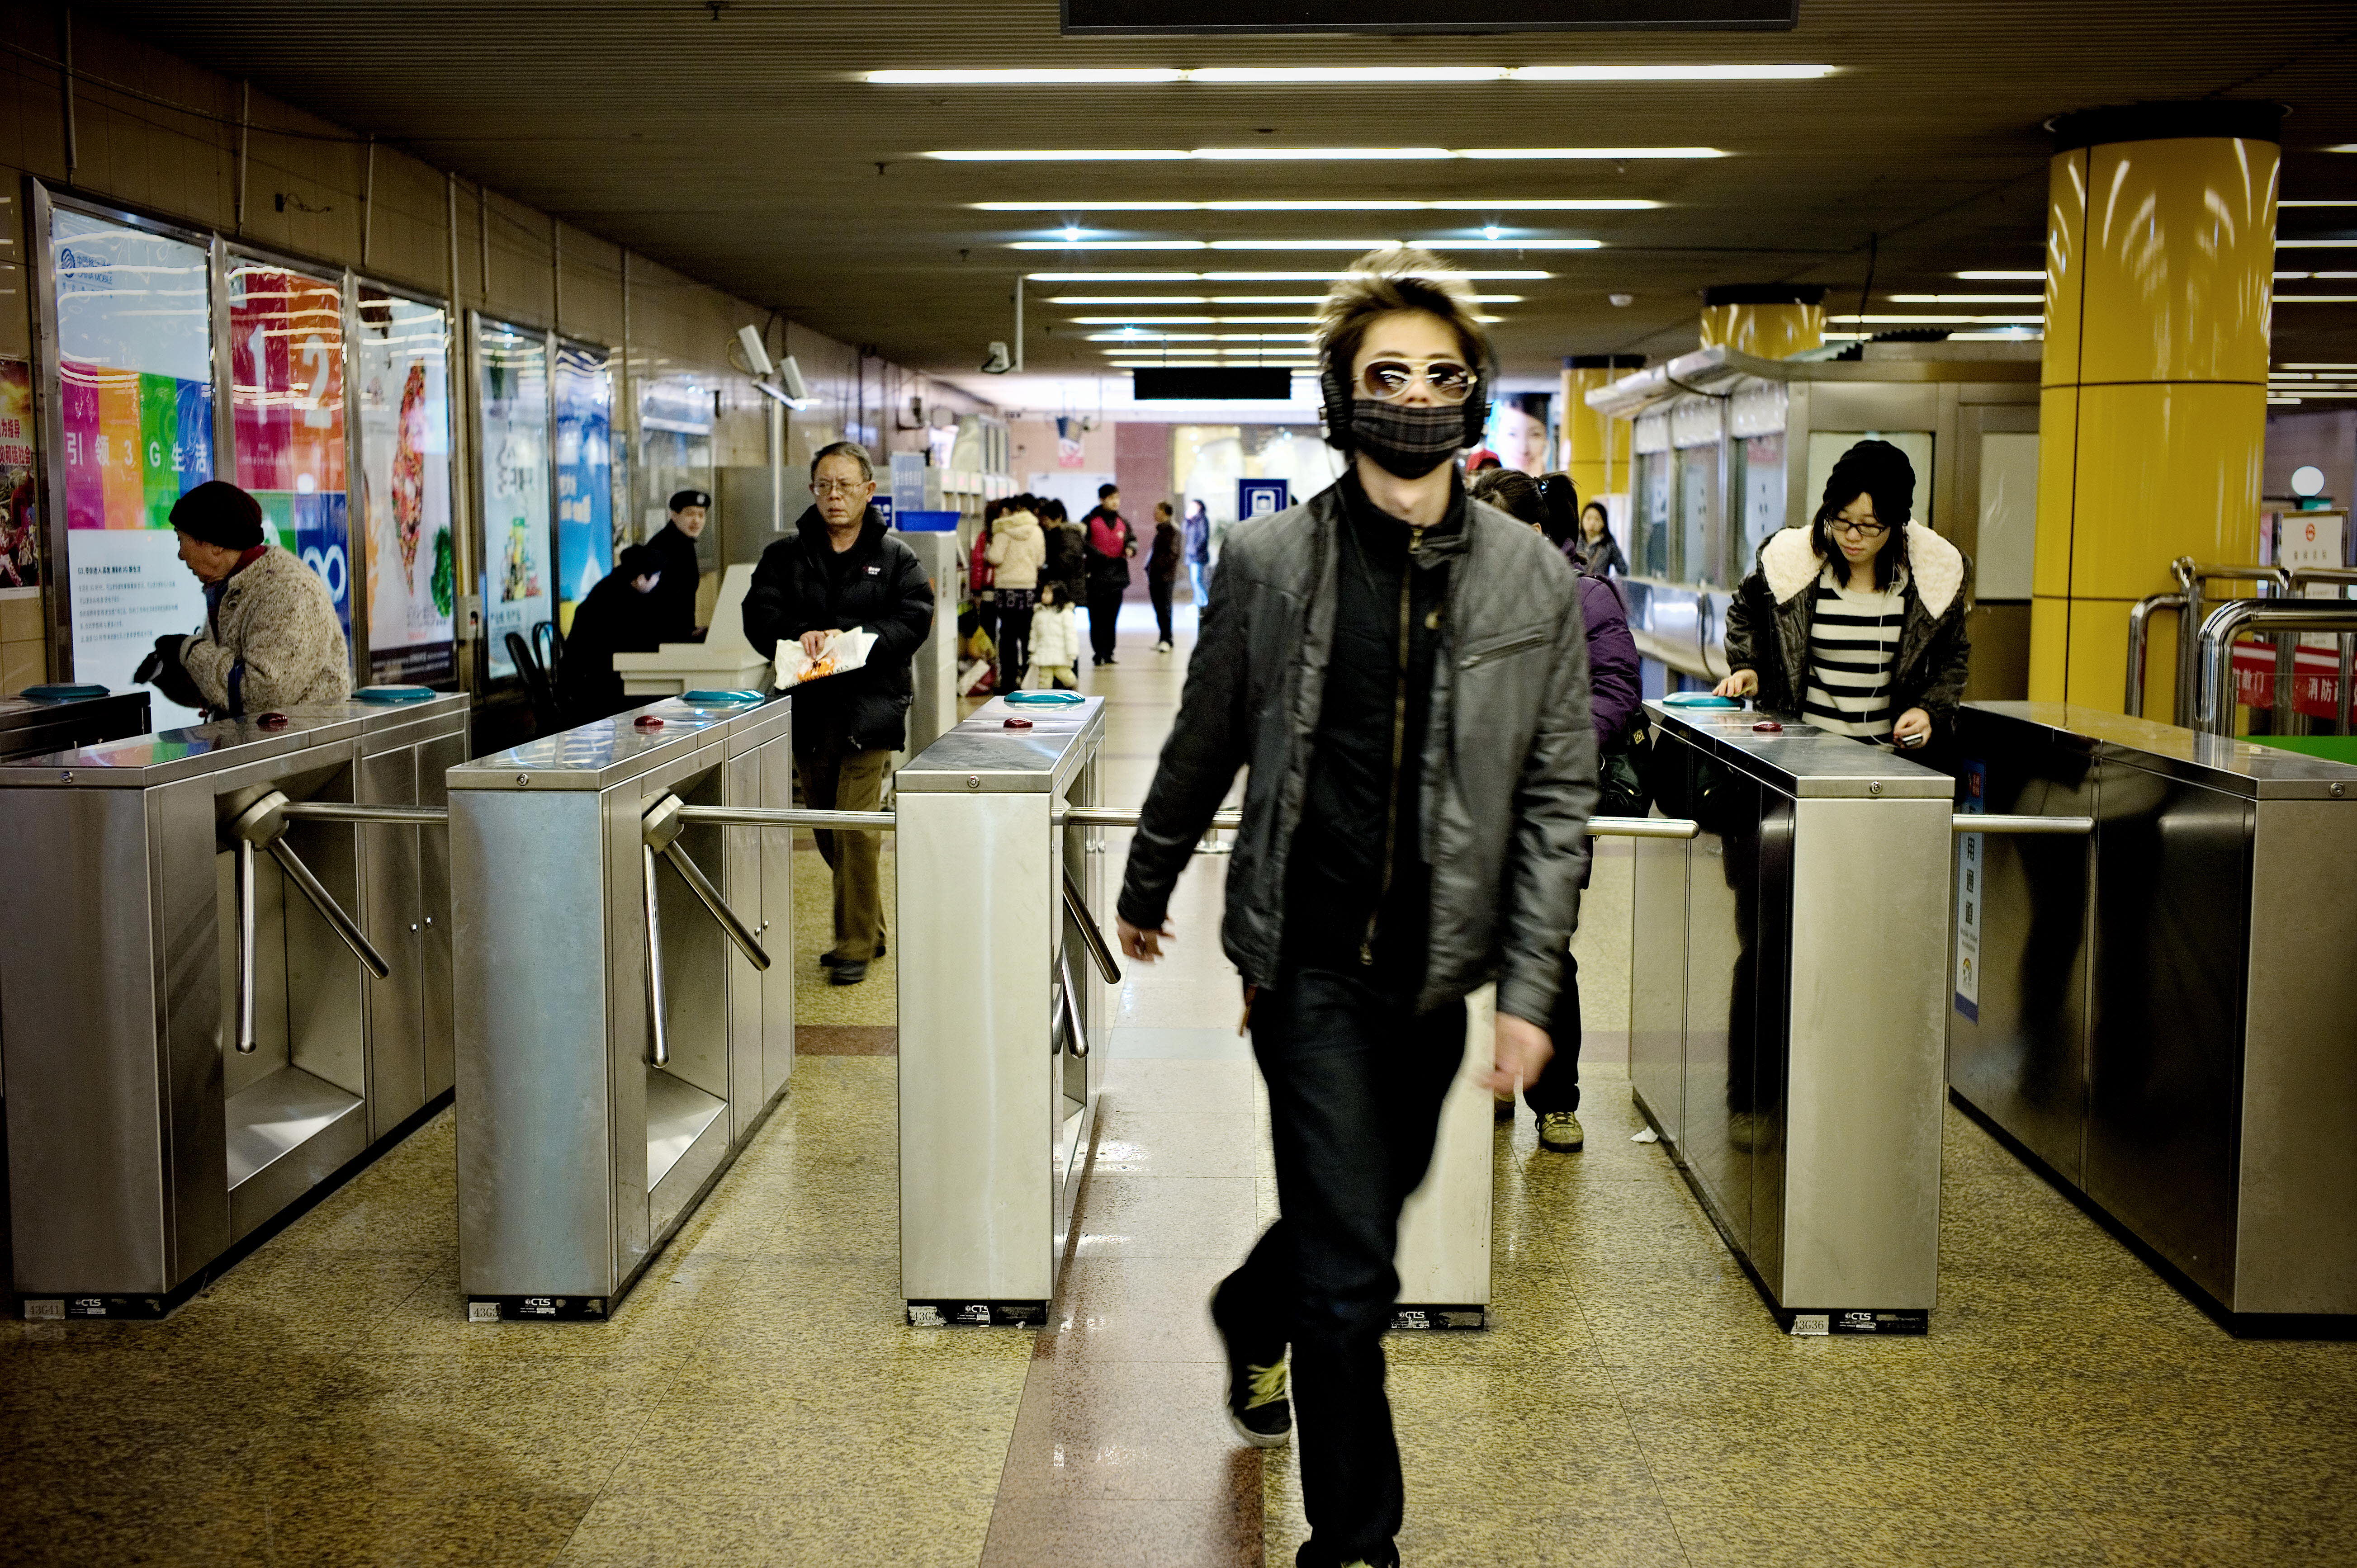 Passengers enter a metro station in Shanghai